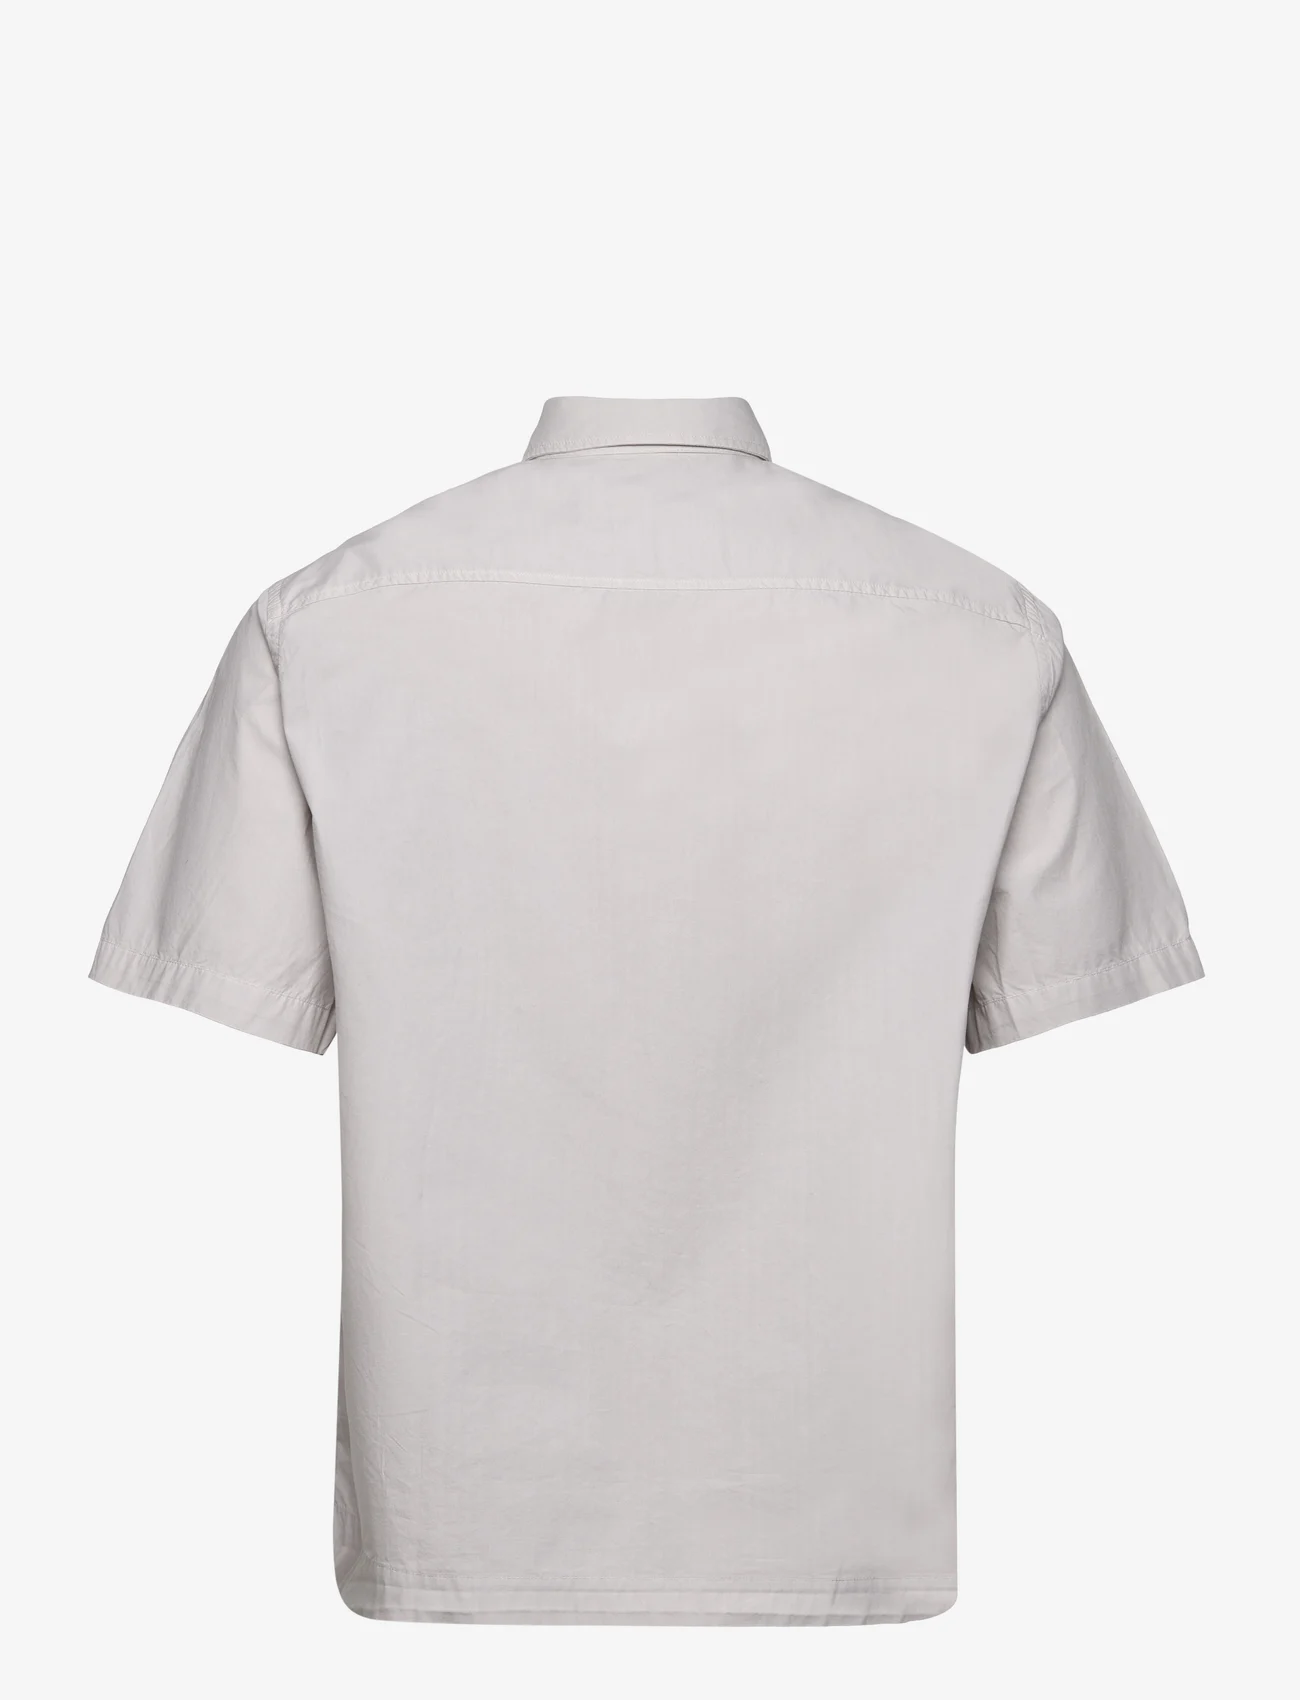 Garment Project - Short Sleeved Shirt - Bone White - kurzarmhemden - bone white - 1